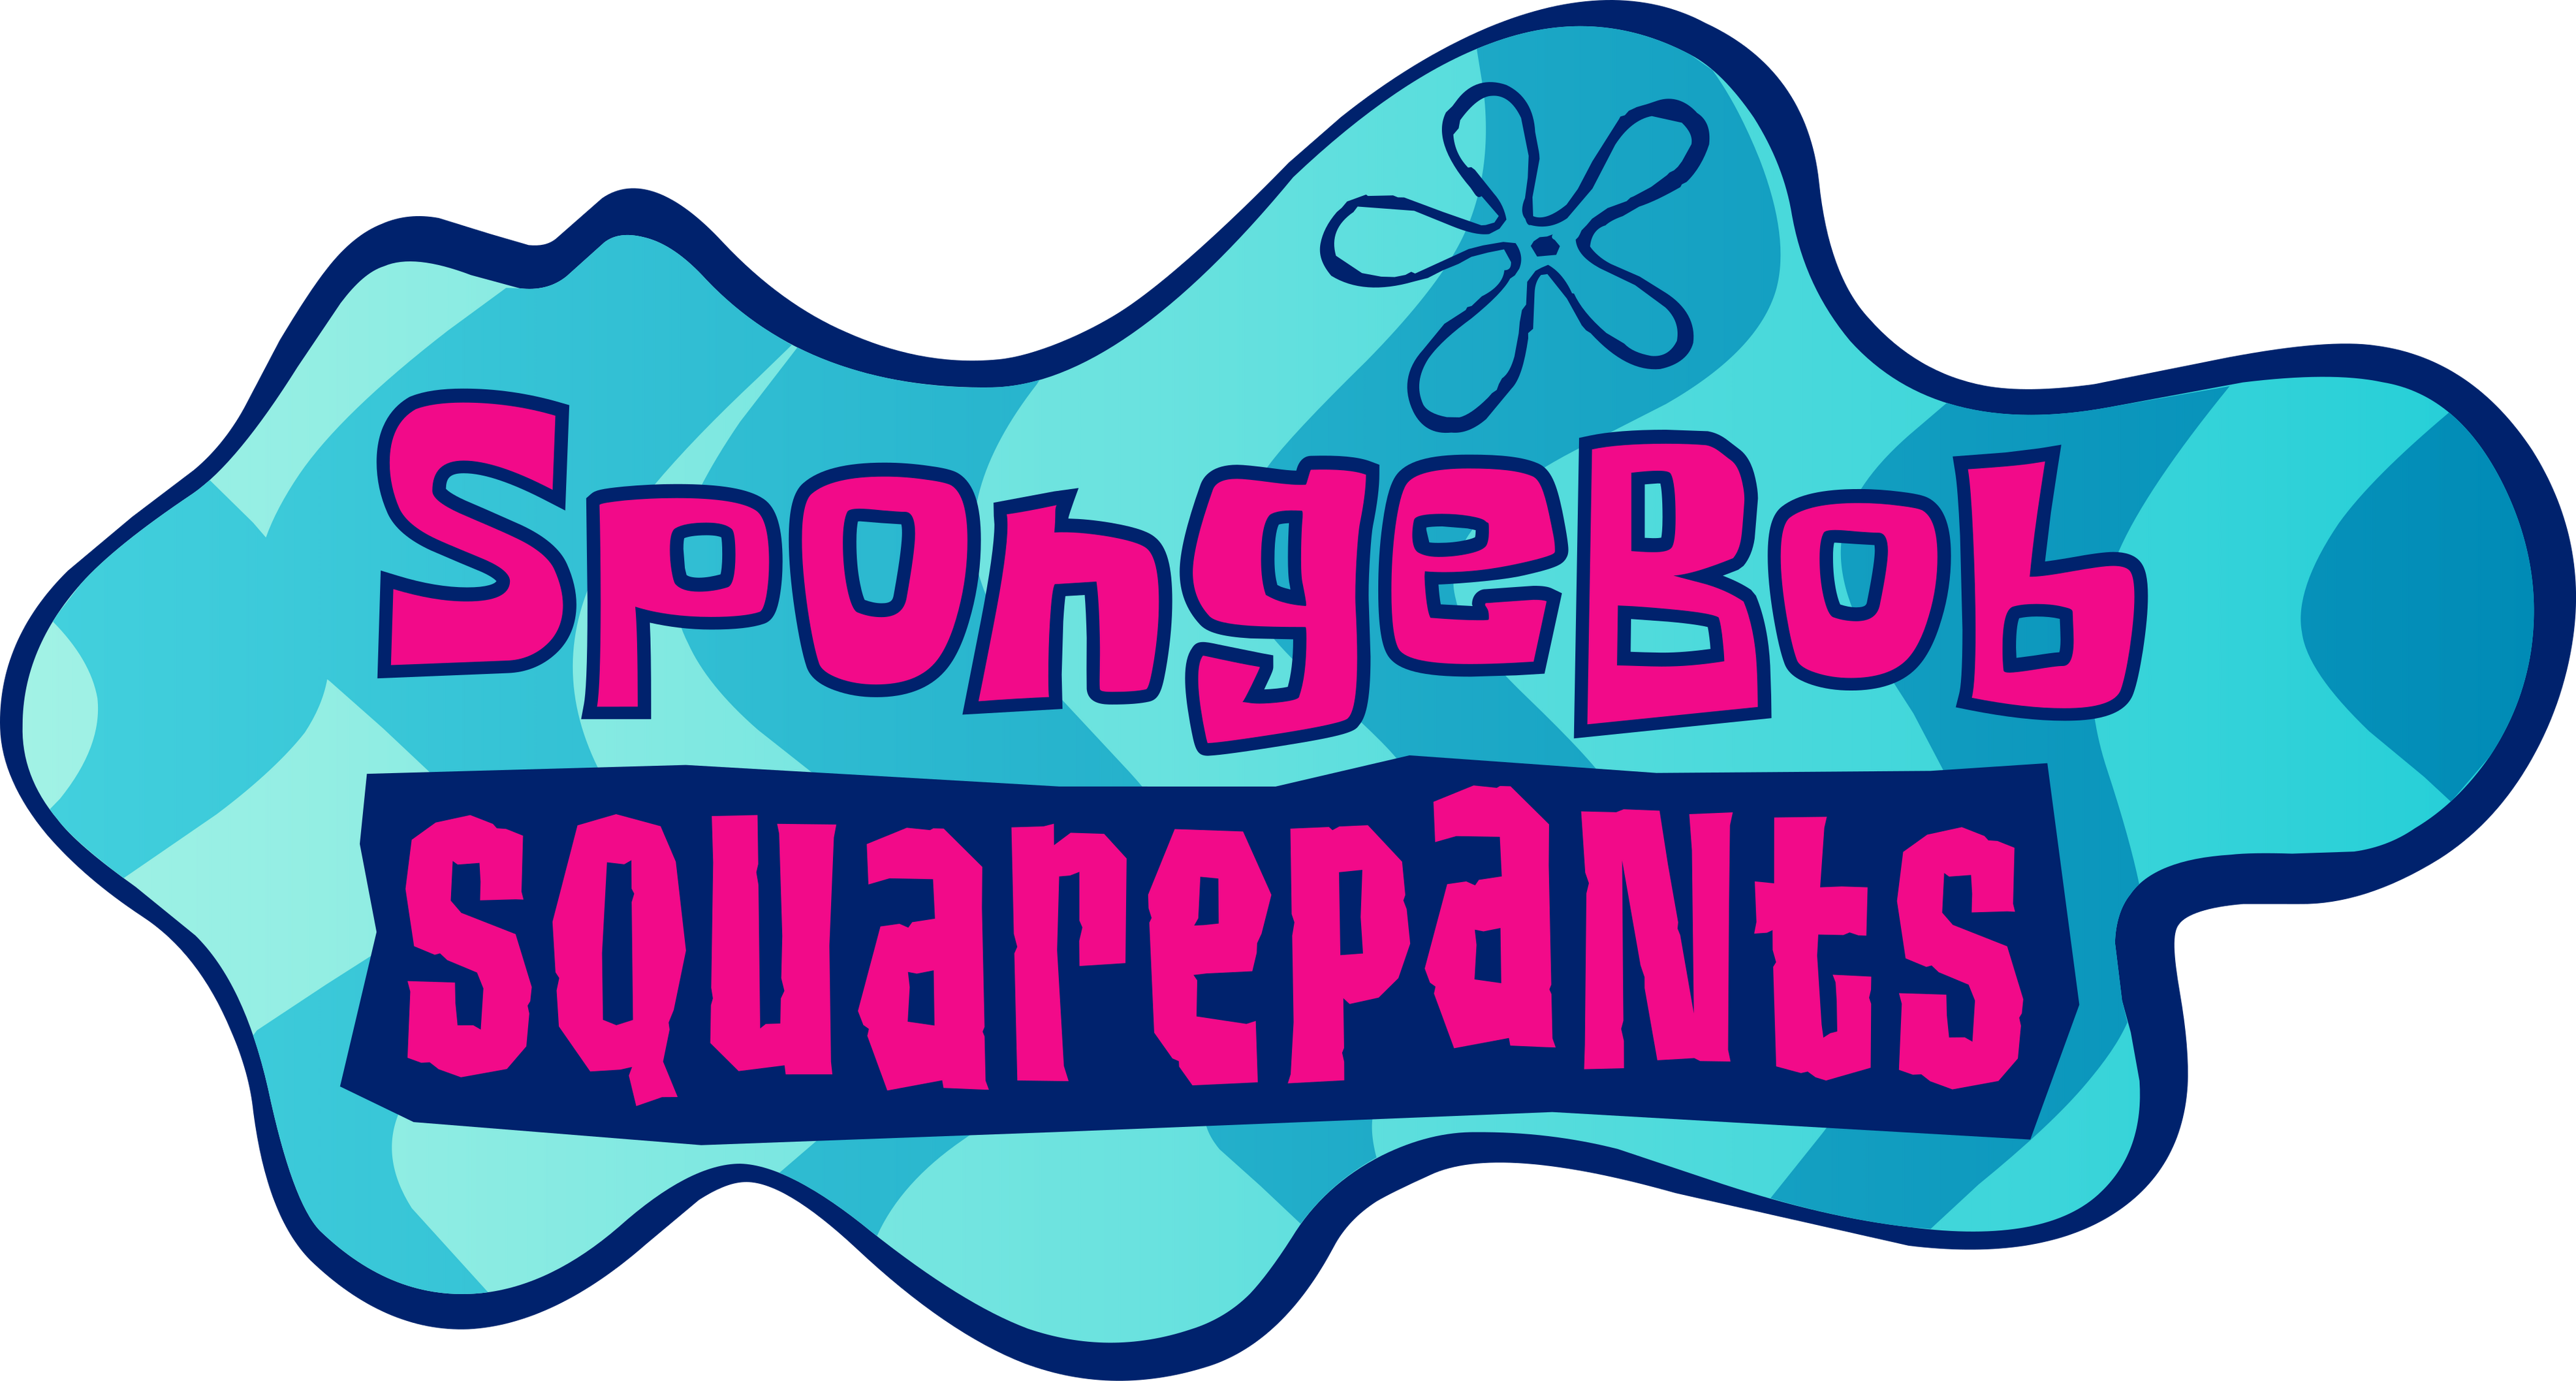 Spongebob squarepants logo timeline wiki